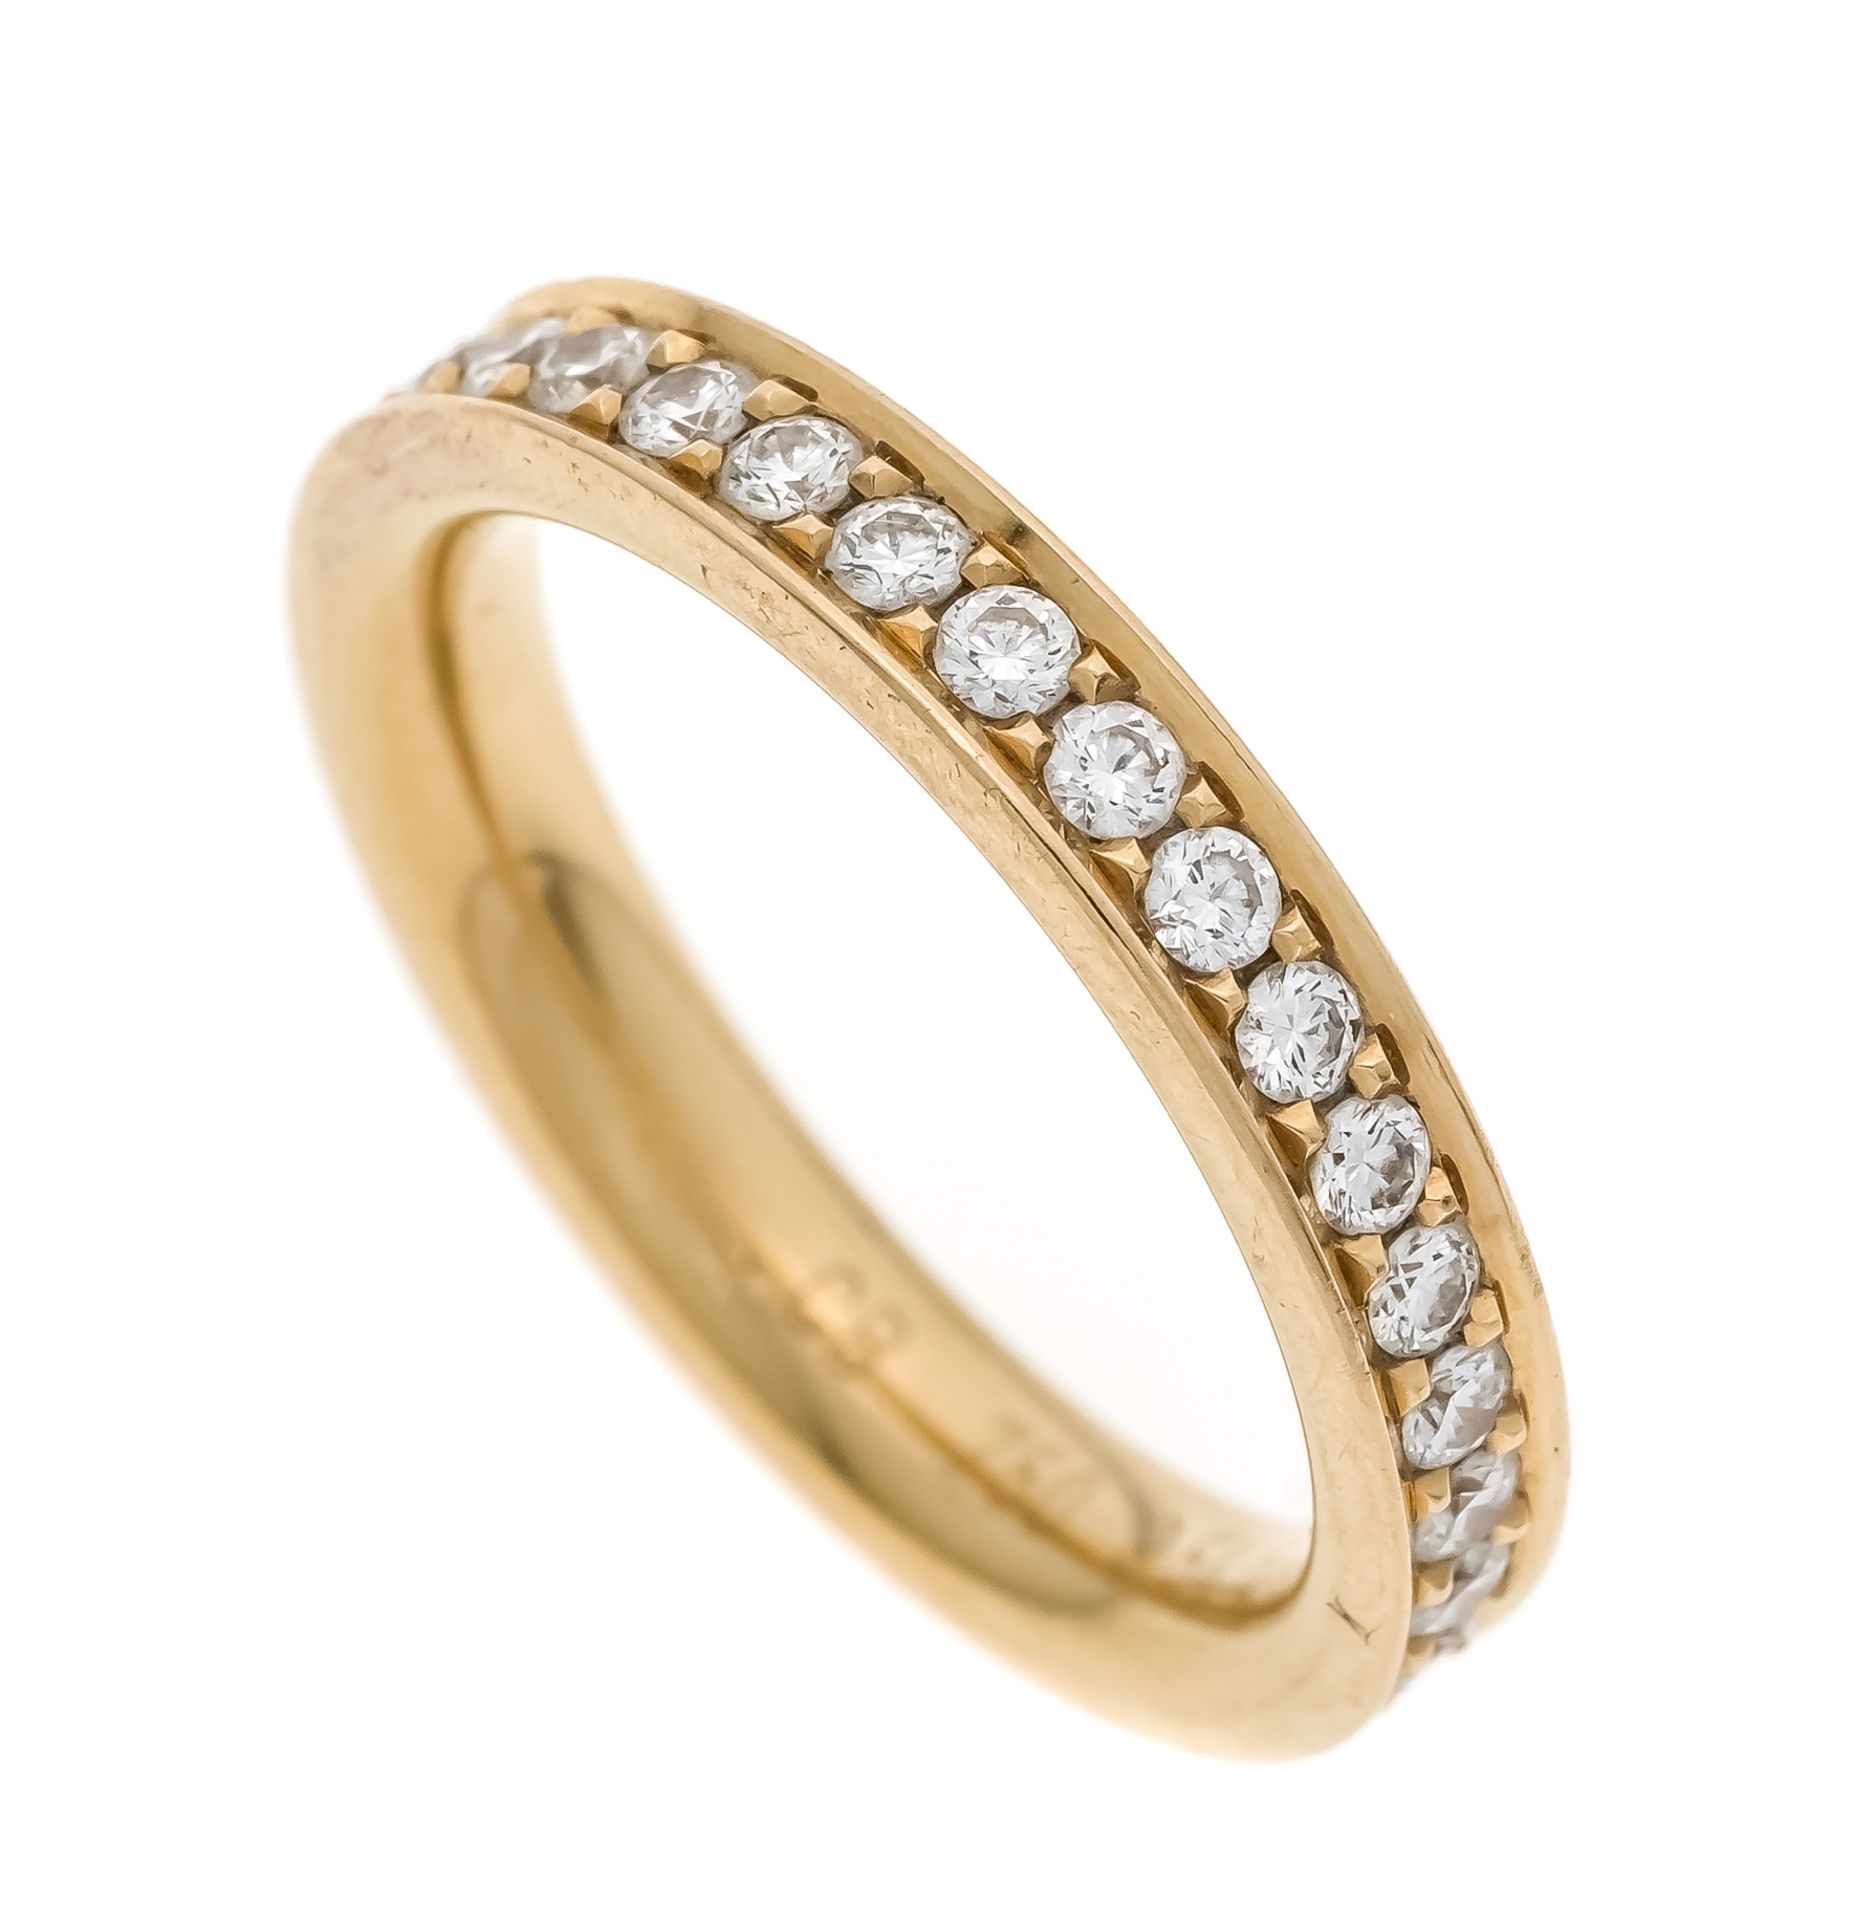 Eternity ring by Bucherer GG 750/000 with 33 brilliant-cut diamonds, 0.54 fine white (G)/VS (